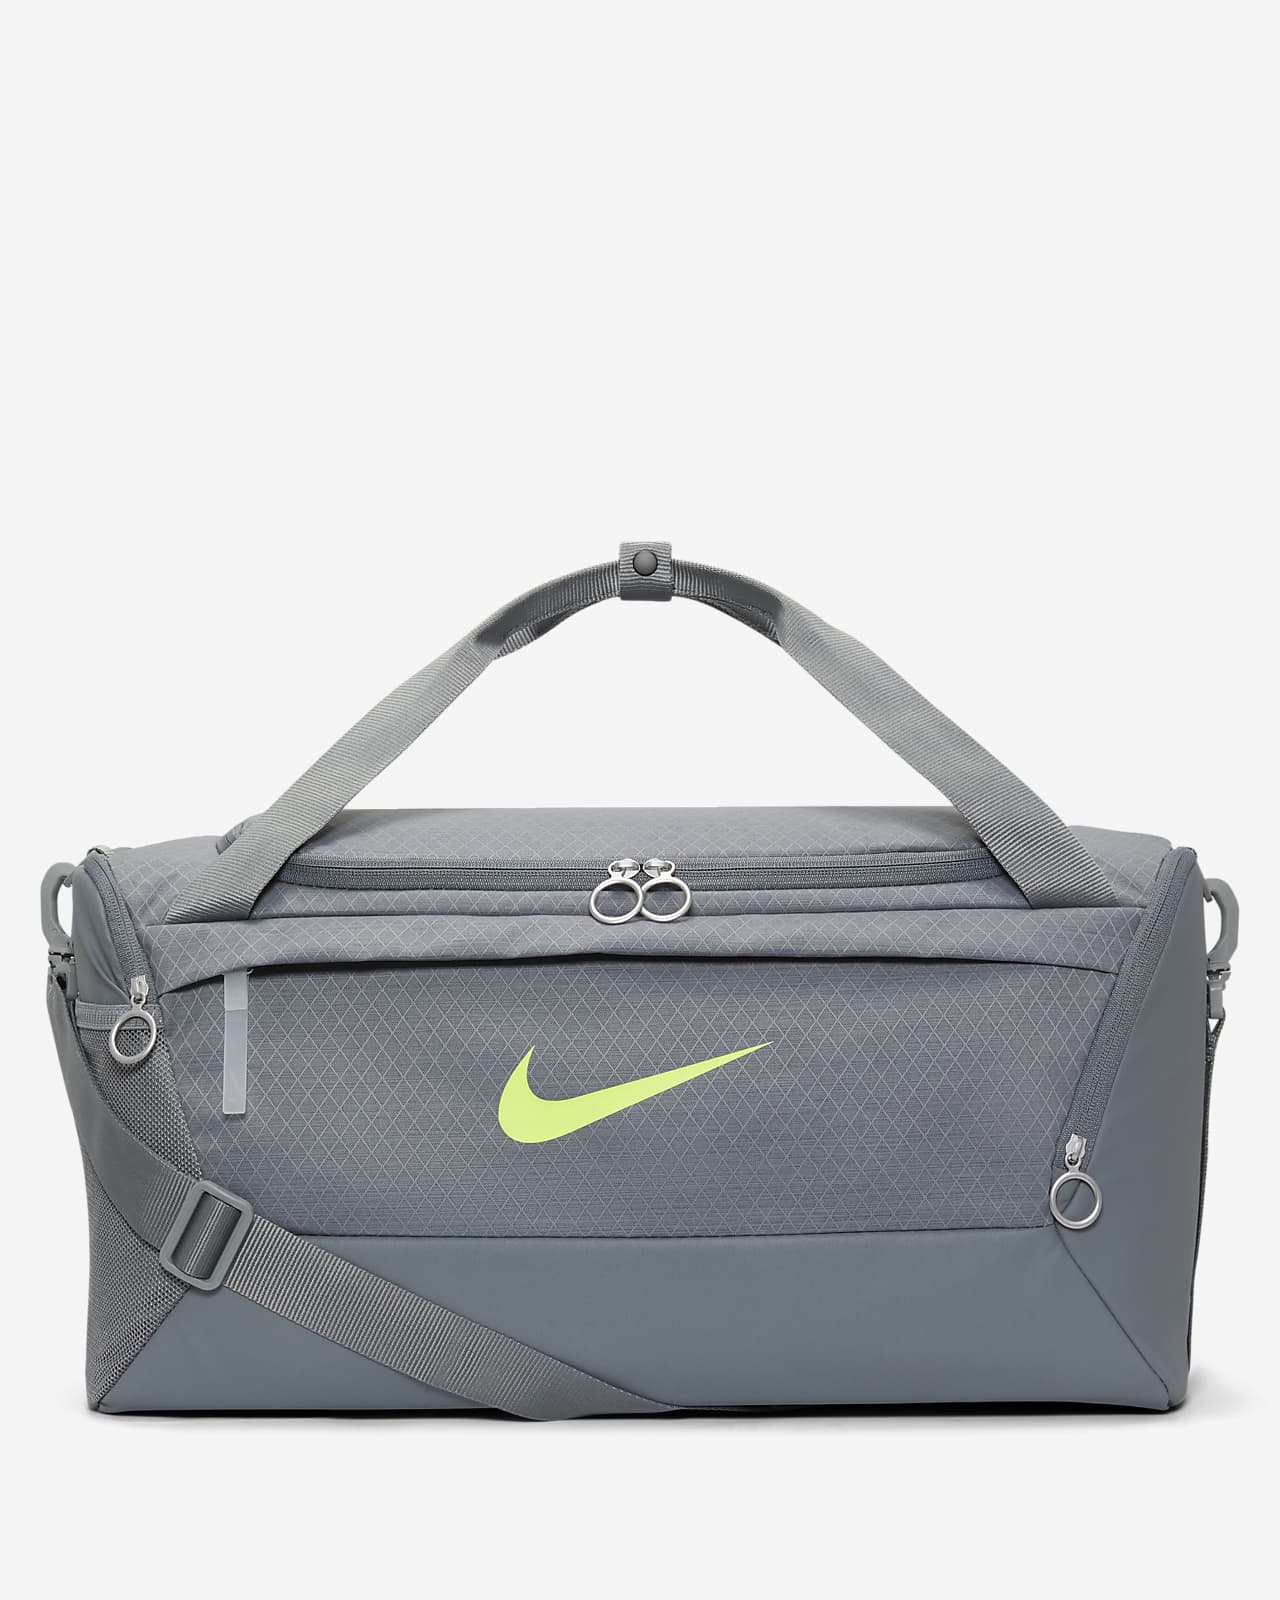 Nike Brasilia Winterized Training Duffel Bag (Small, 41L). Nike SG